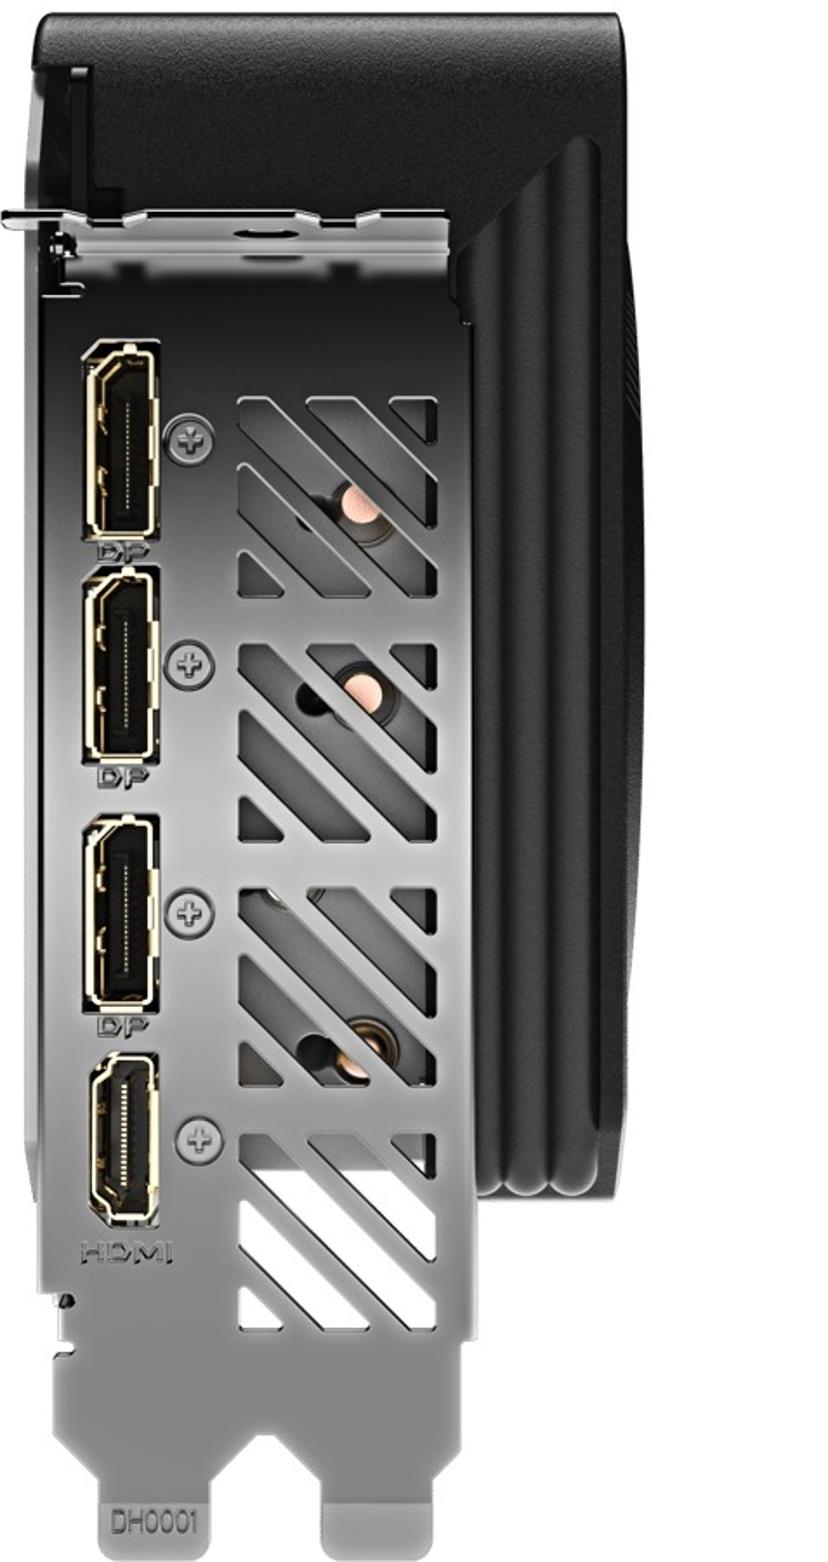 Gigabyte Geforce RTX 4070 Gaming OC 12GB Näytönohjain